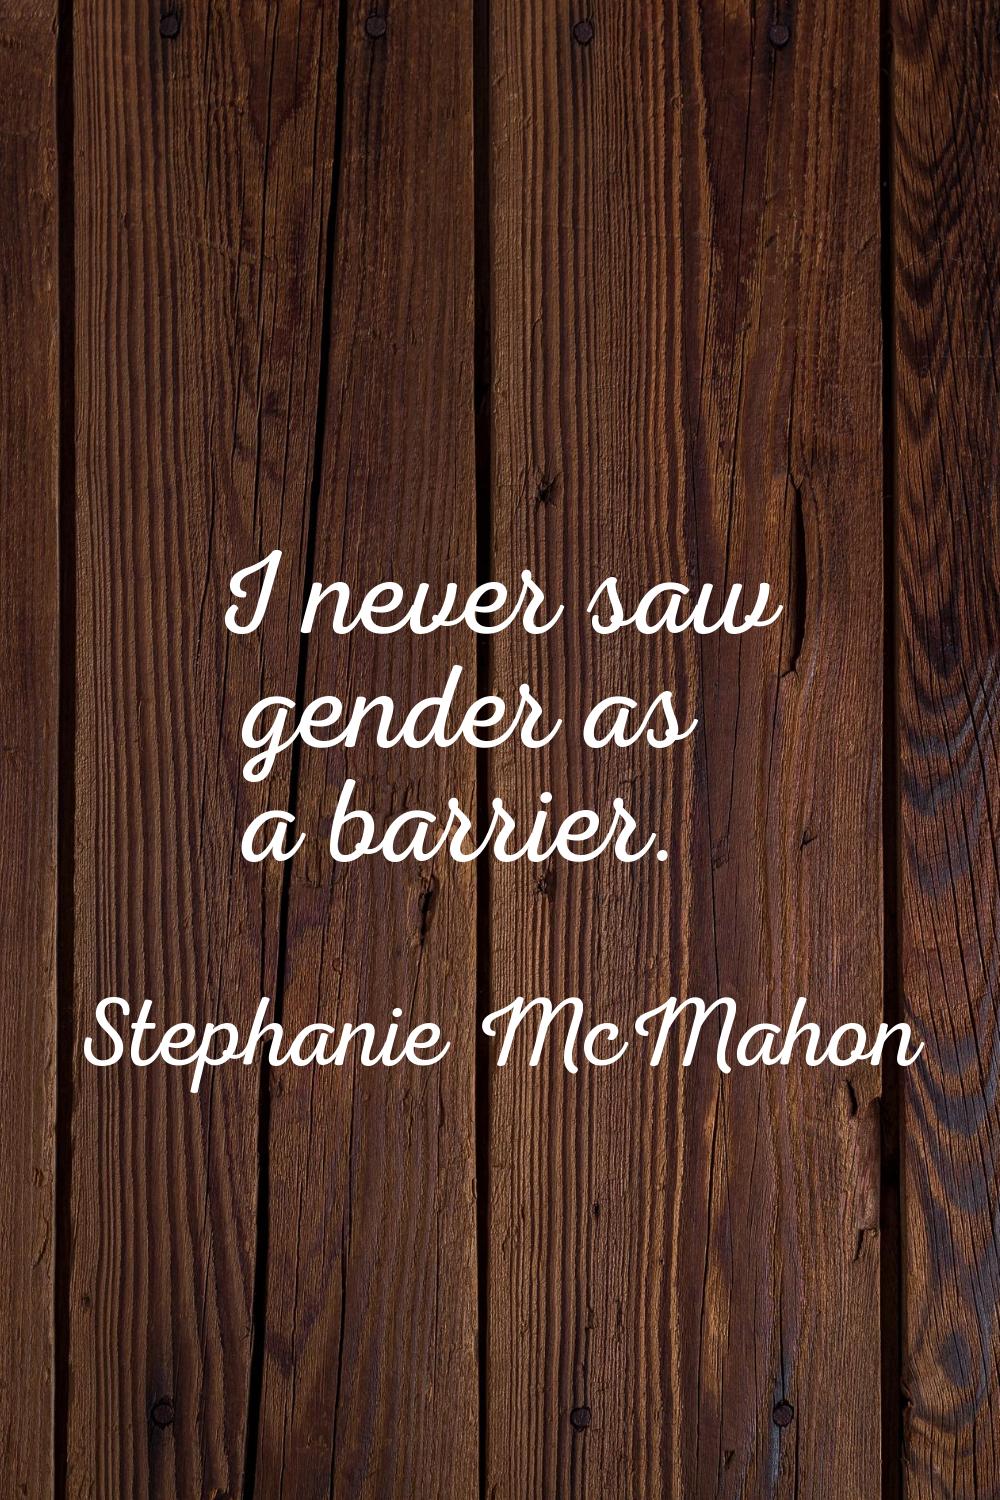 I never saw gender as a barrier.